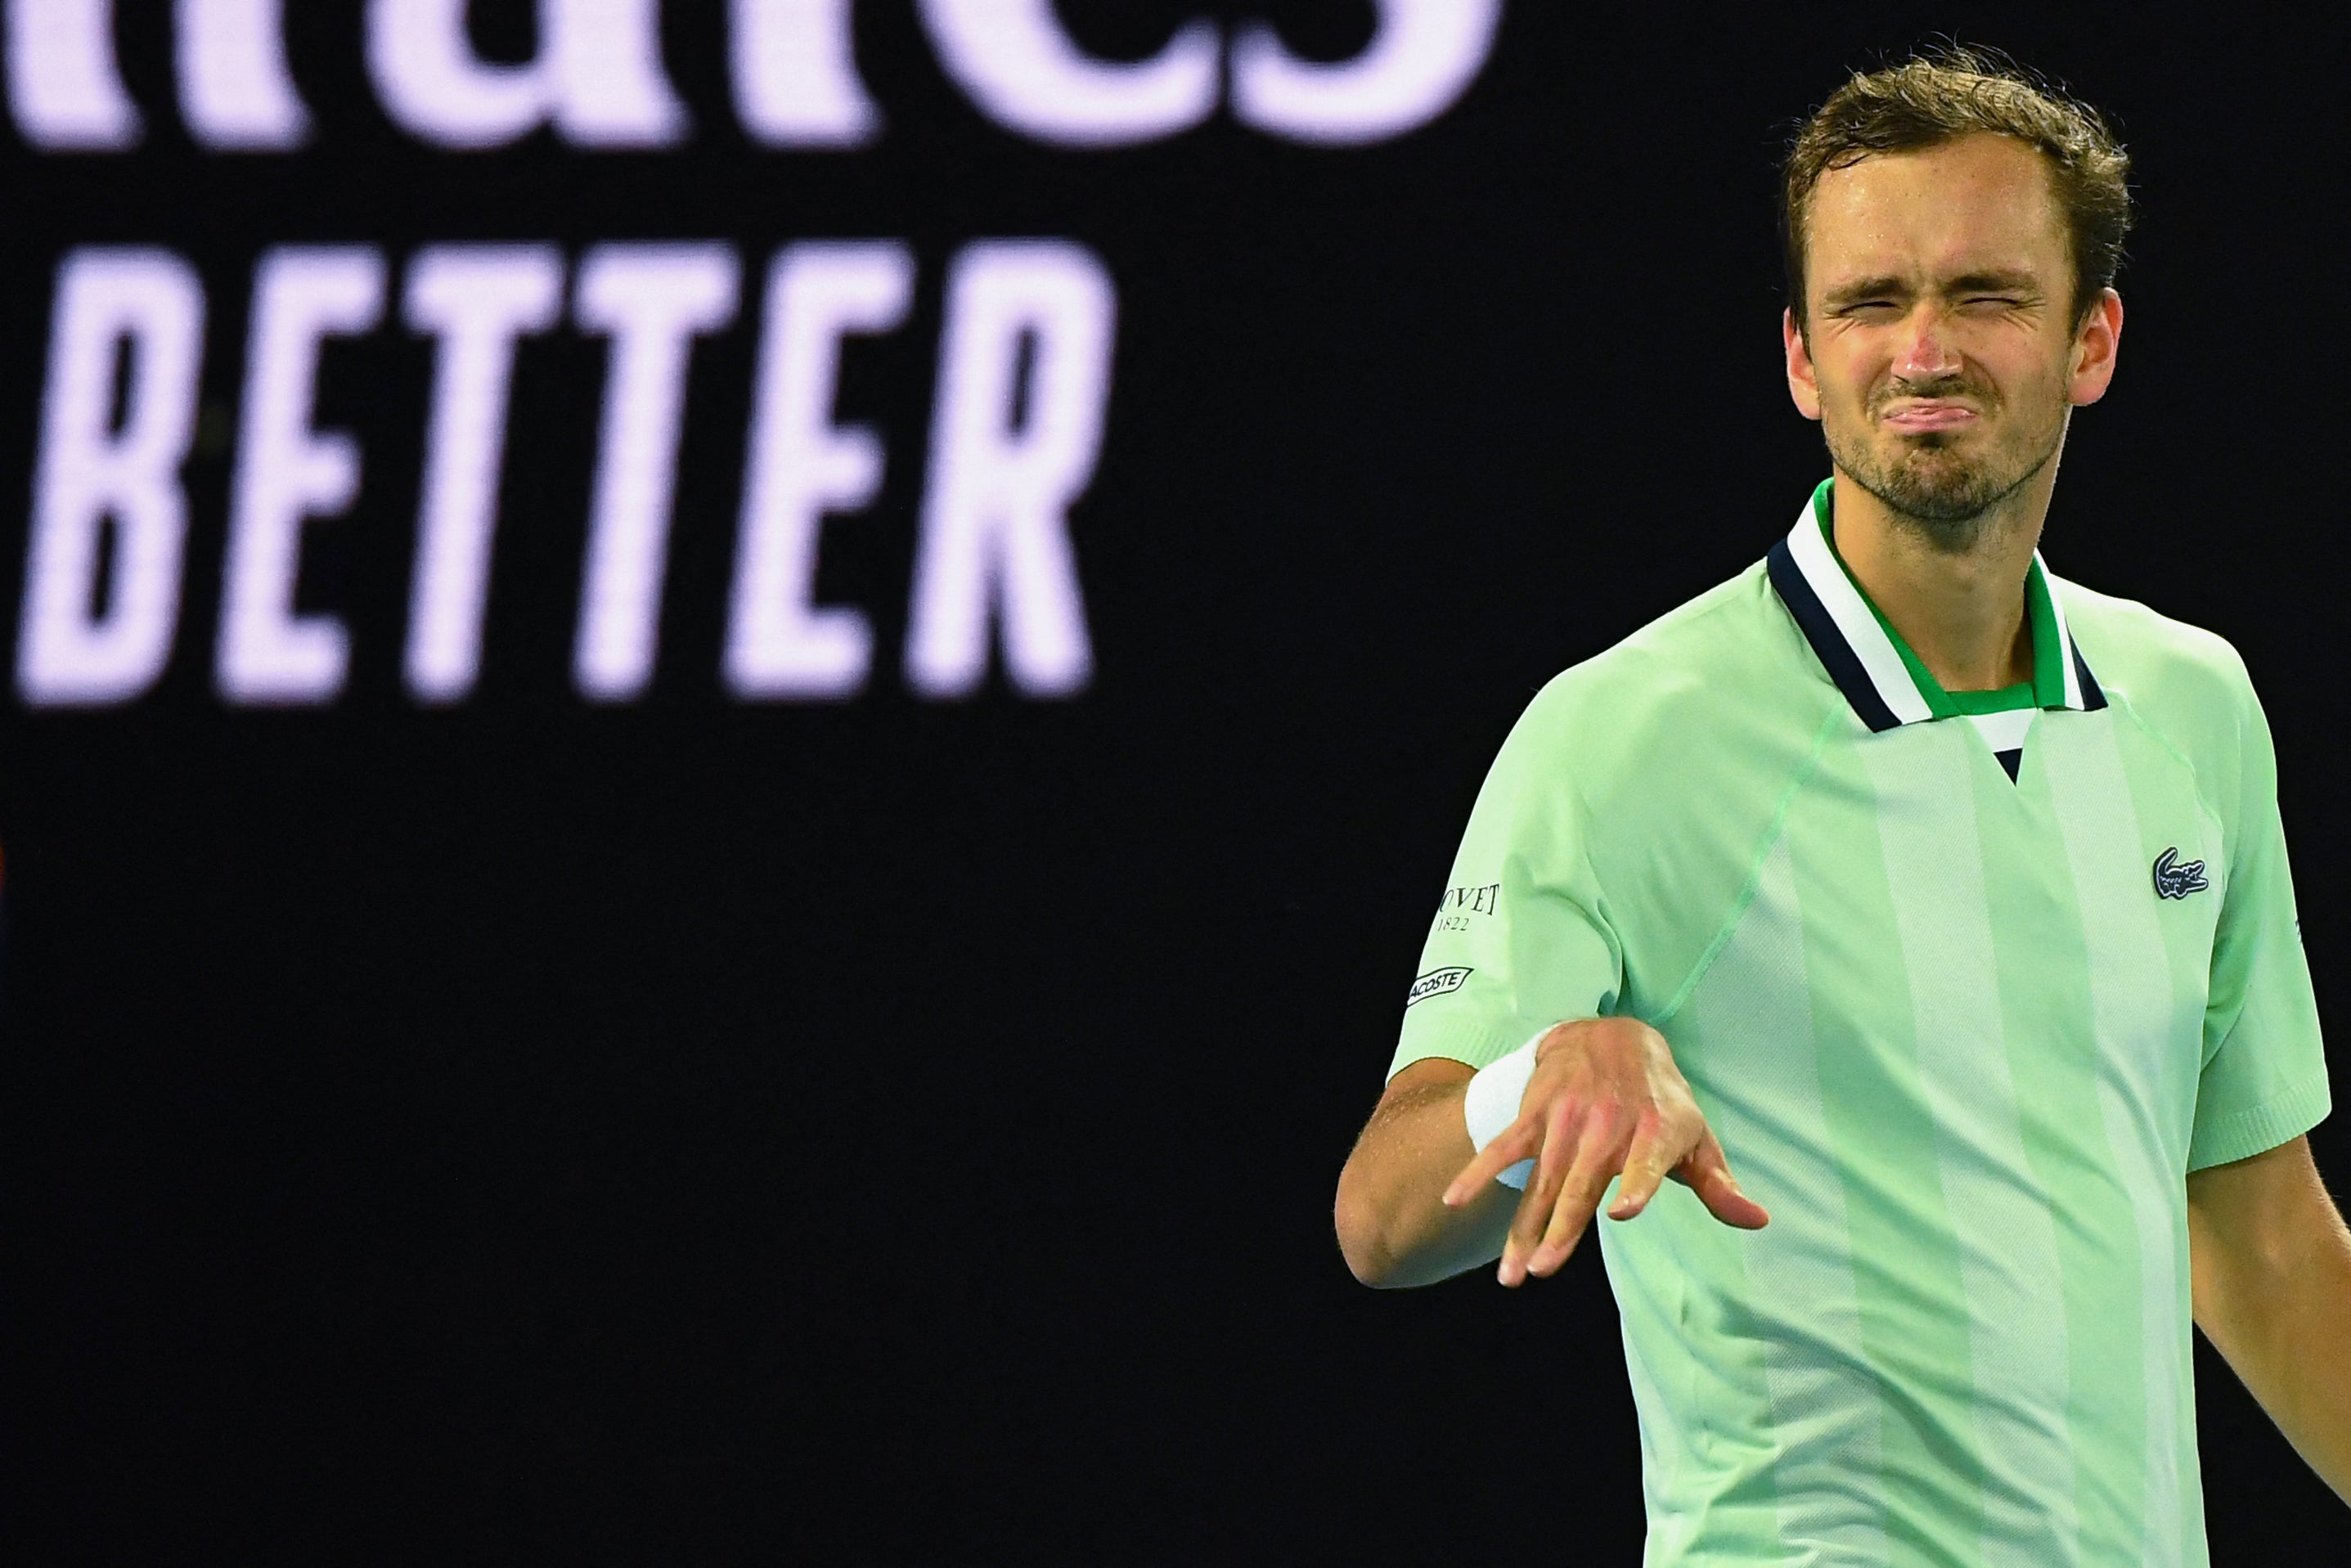 Medvedev took on the Australian Open crowd